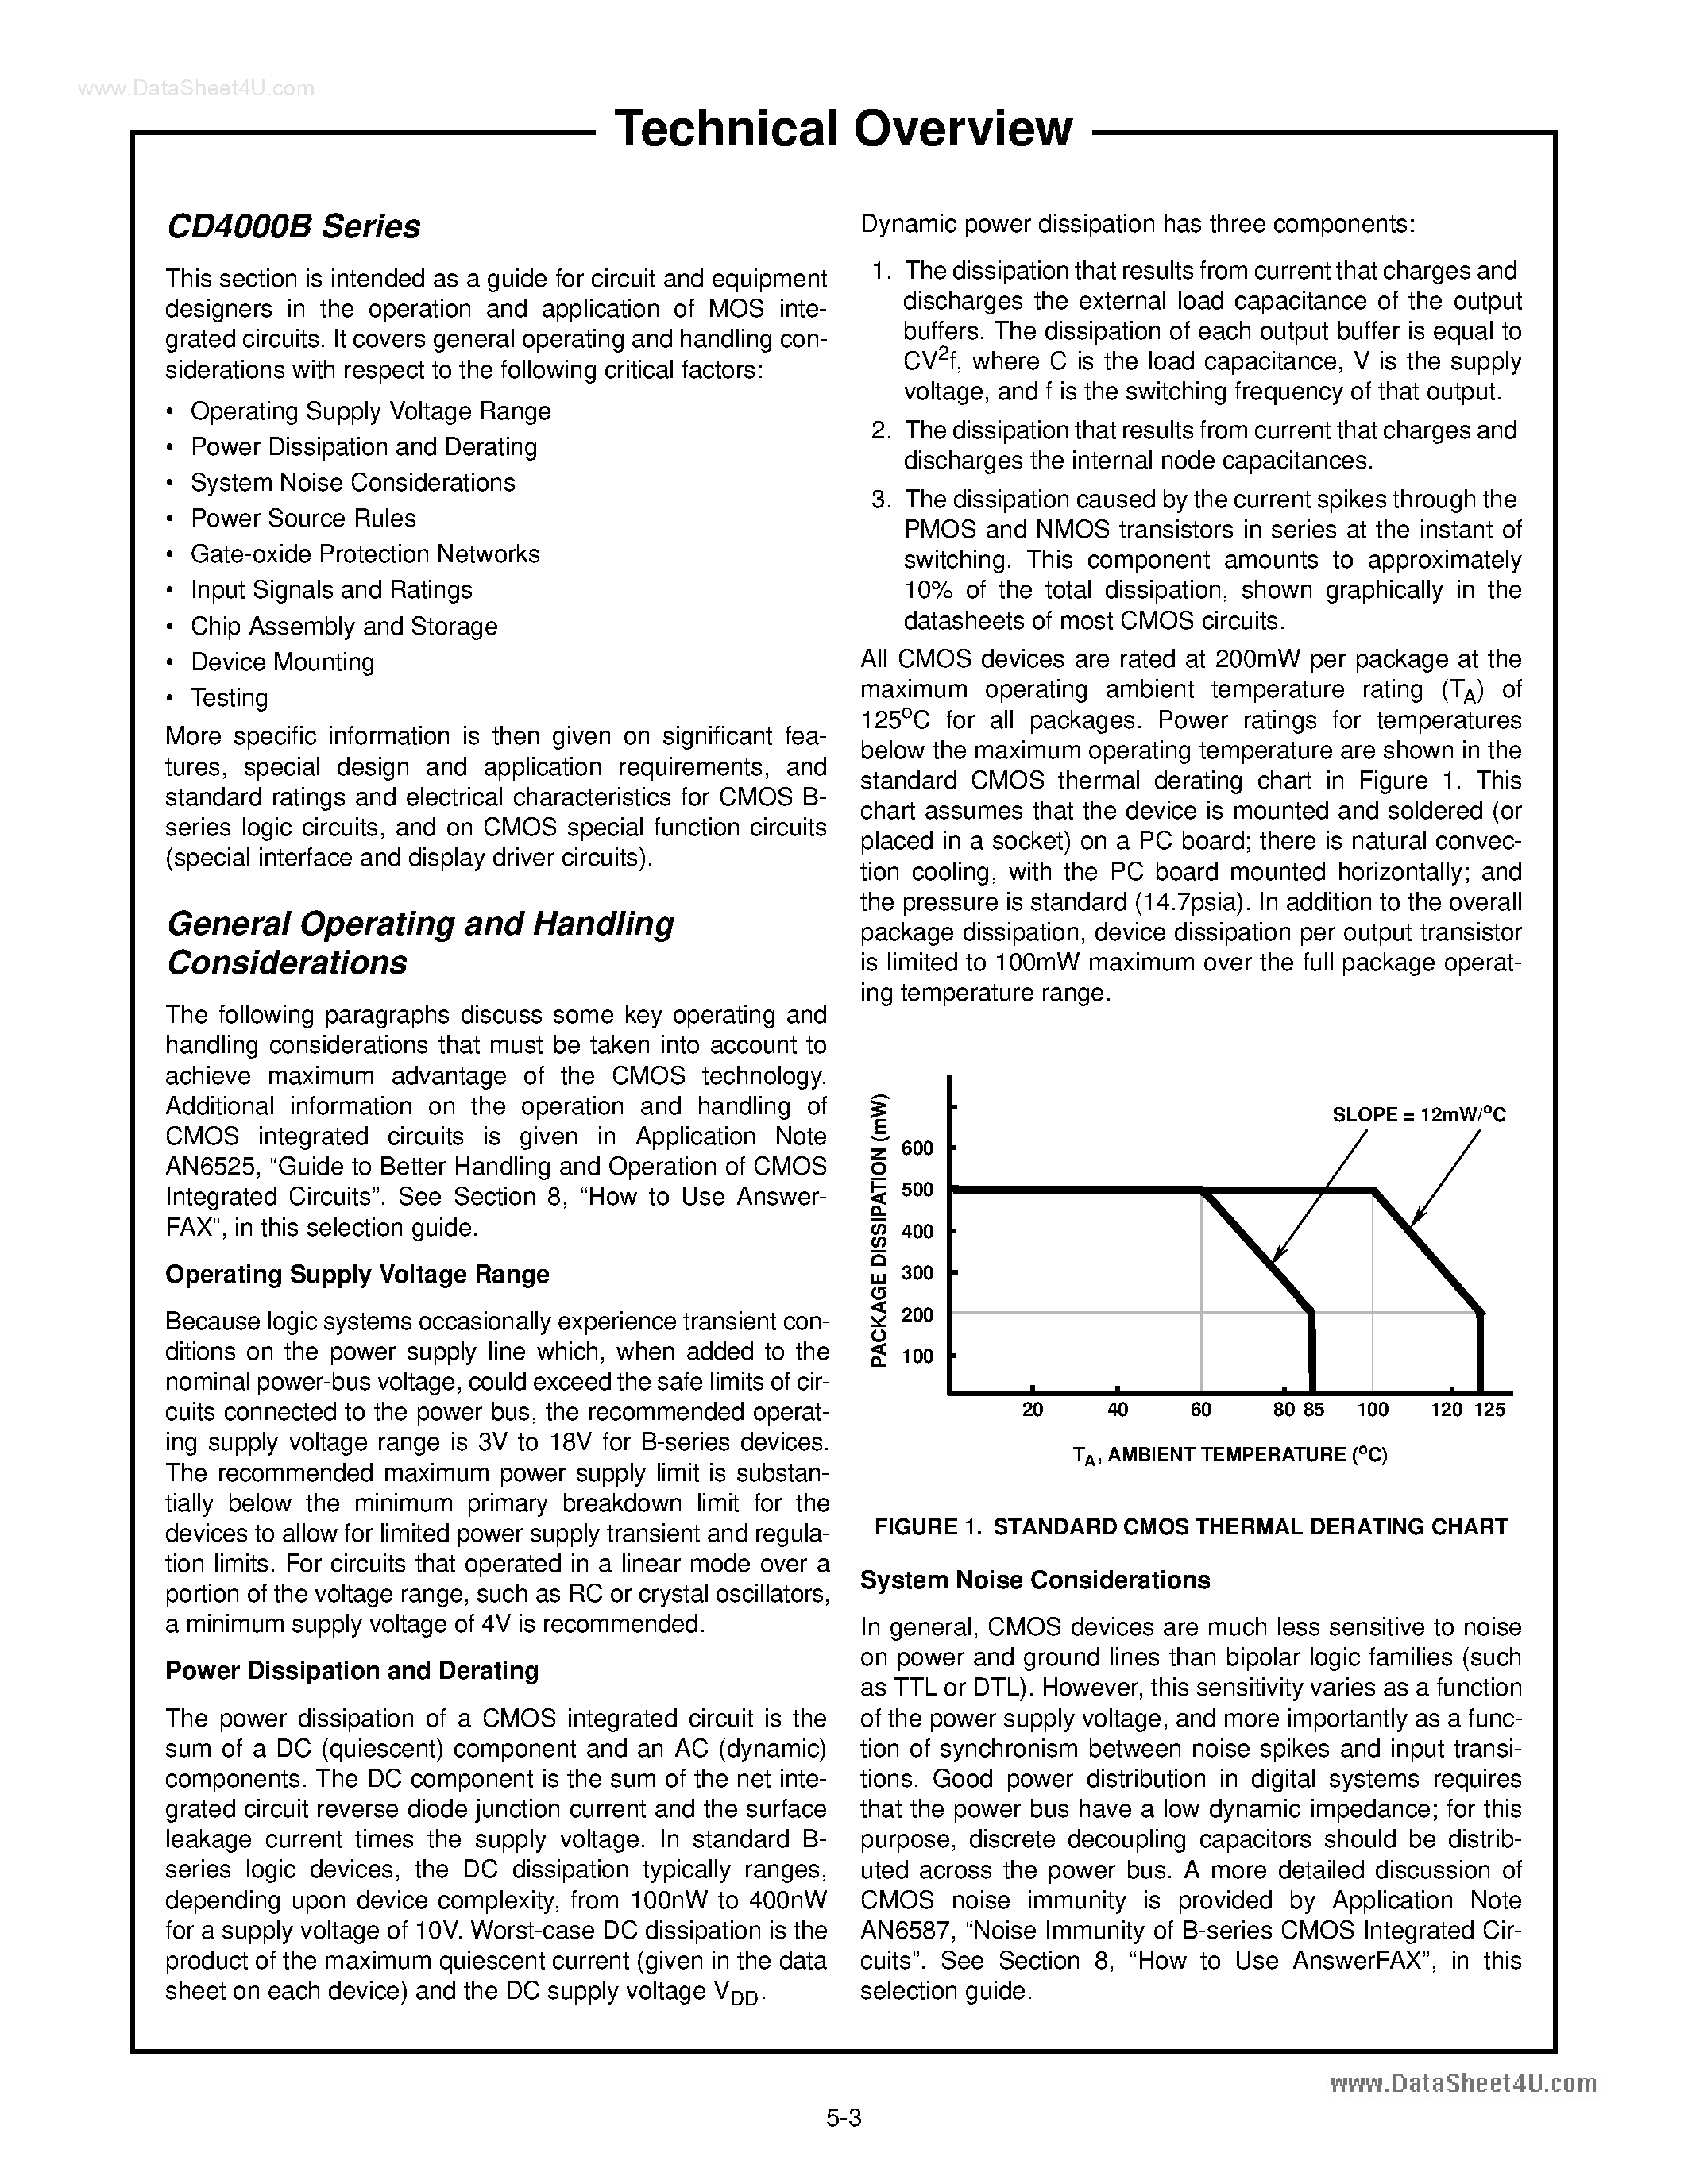 Даташит CD4096B - (CD4000B Series) Technical Overview страница 1